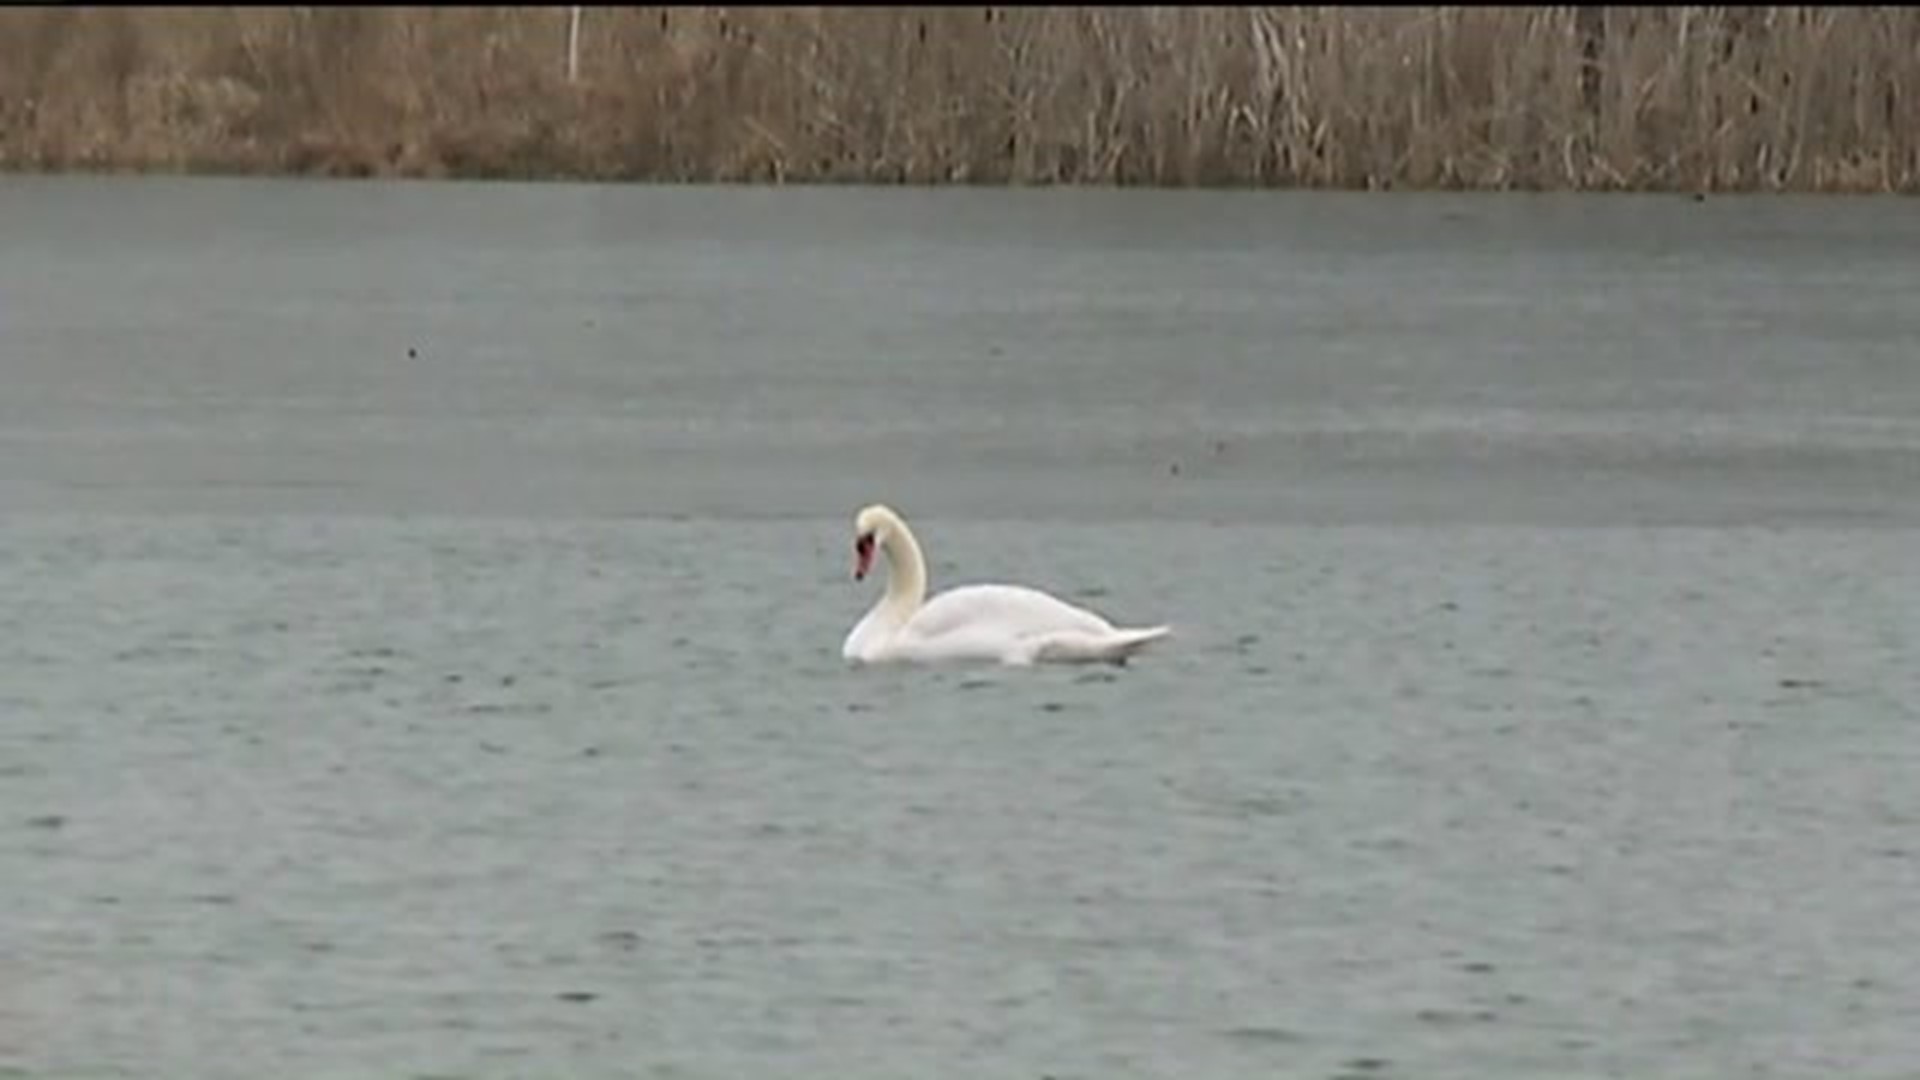 Community Members Upset Over Killed Swan